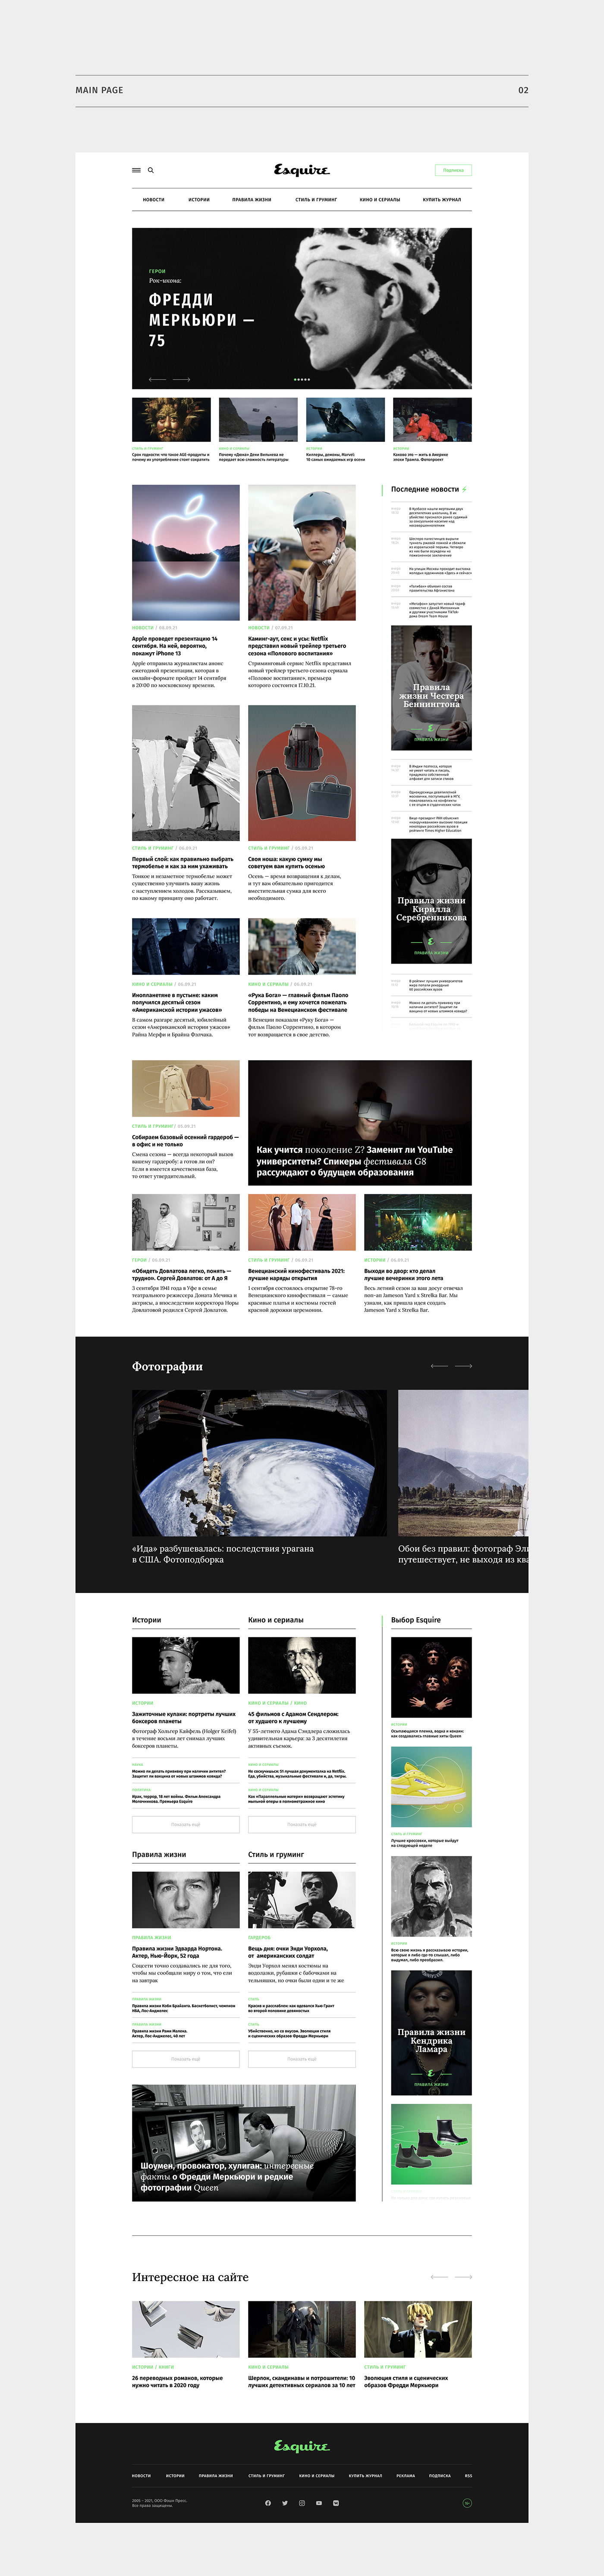 Esquire journal magazine news online site user interface Website новостной сайт эсквайр